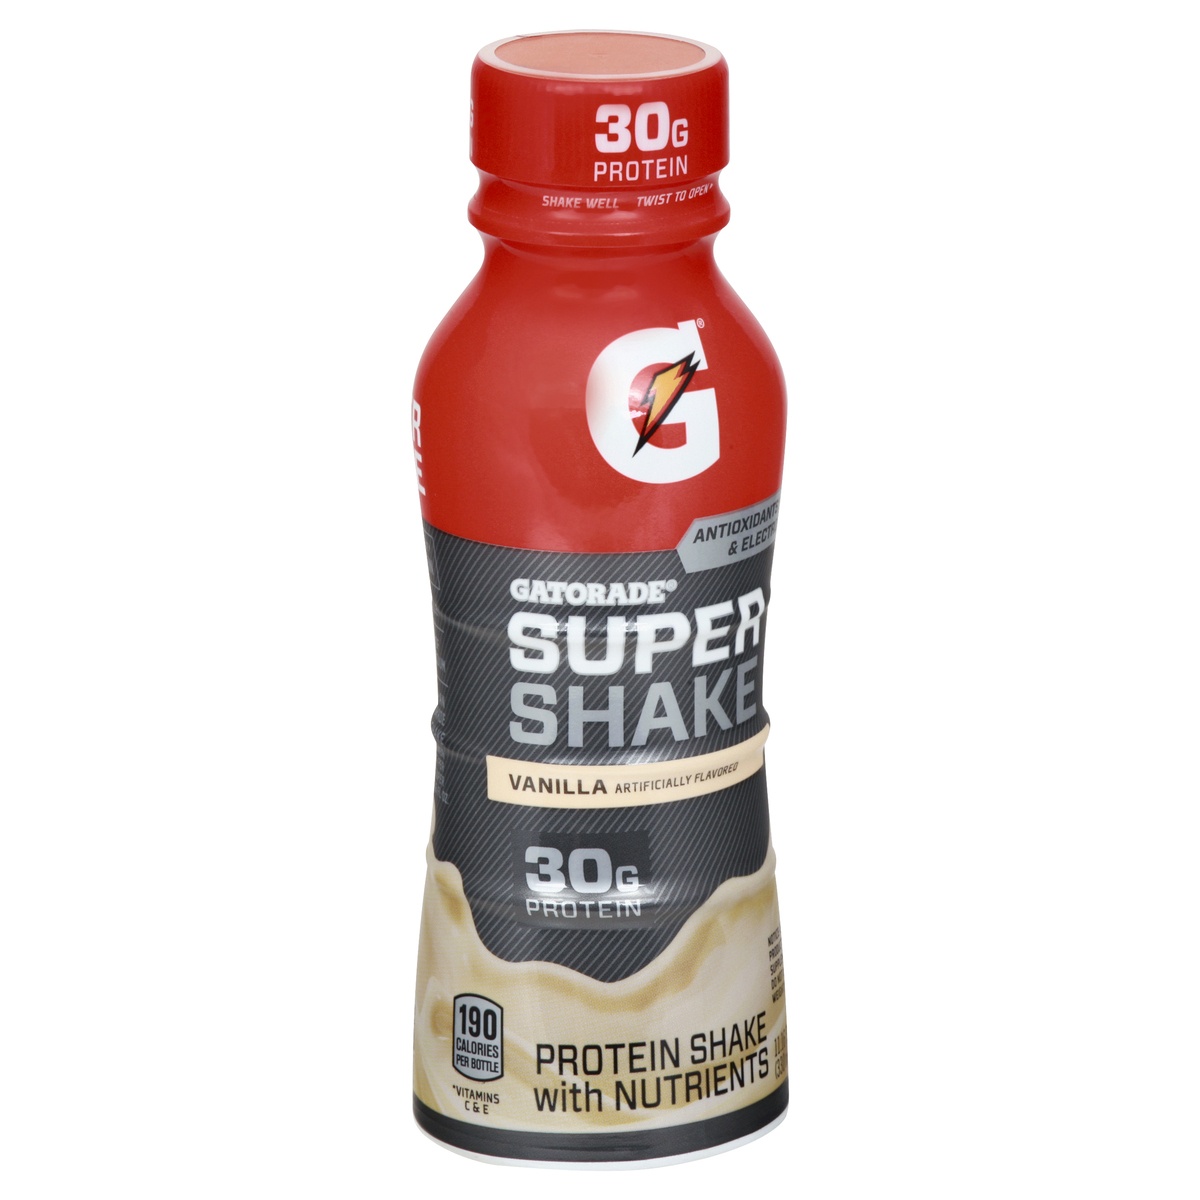 Gatorade Recover Protein Shake Vanilla (11.16 fluid ounce plastic